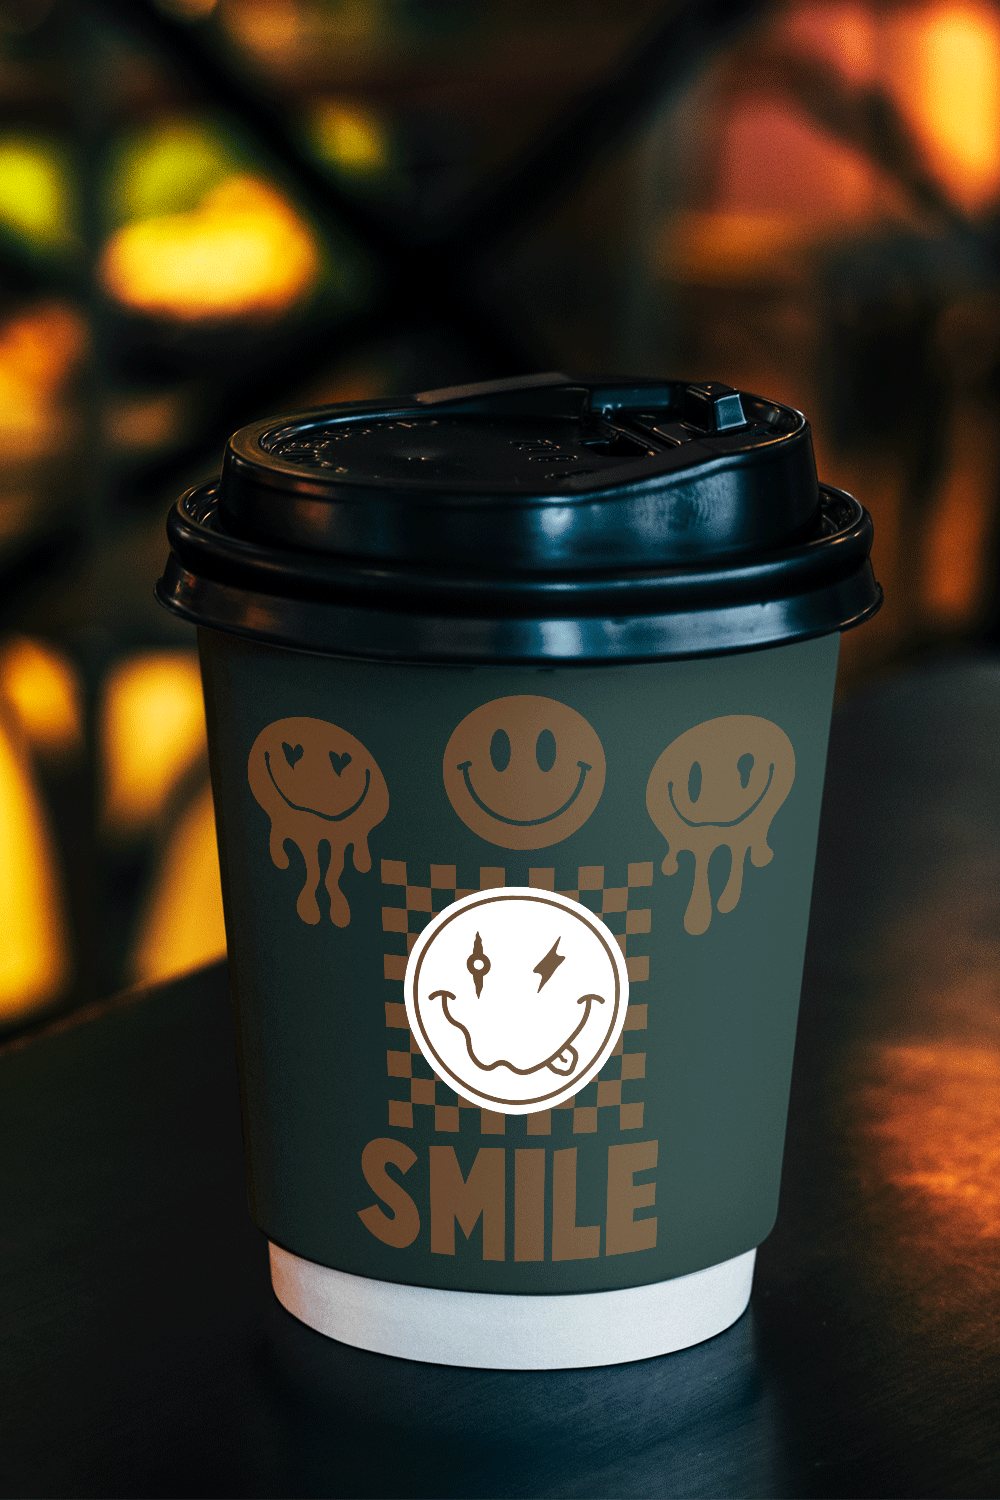 smiley faces coffe cup 627